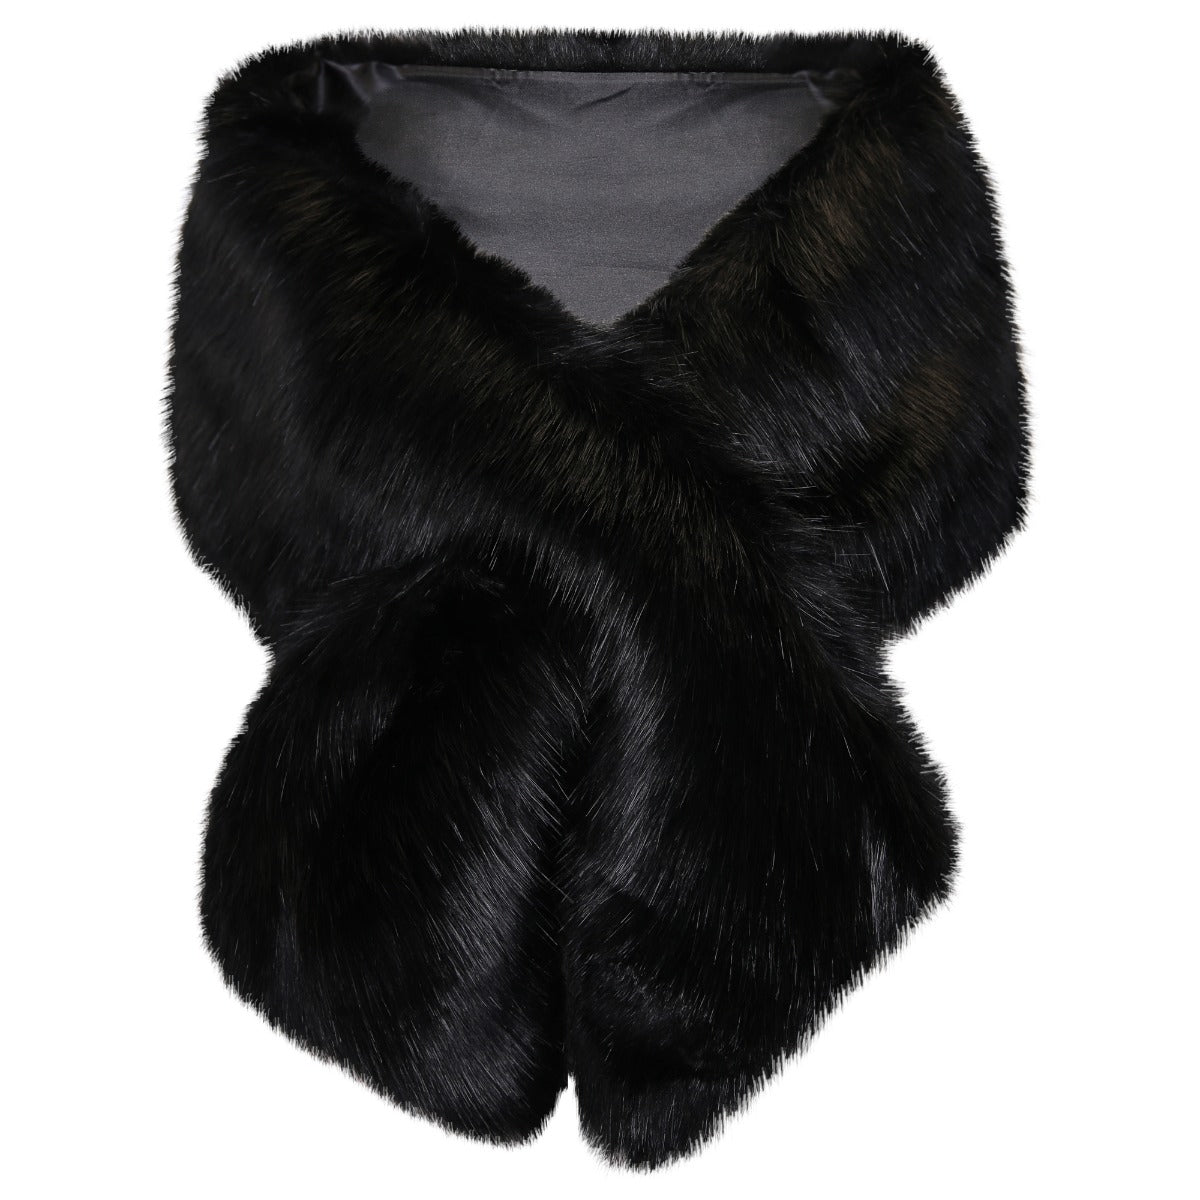 Ro Rox Clara Luxurious Winter Faux Fur Shawl Wrap